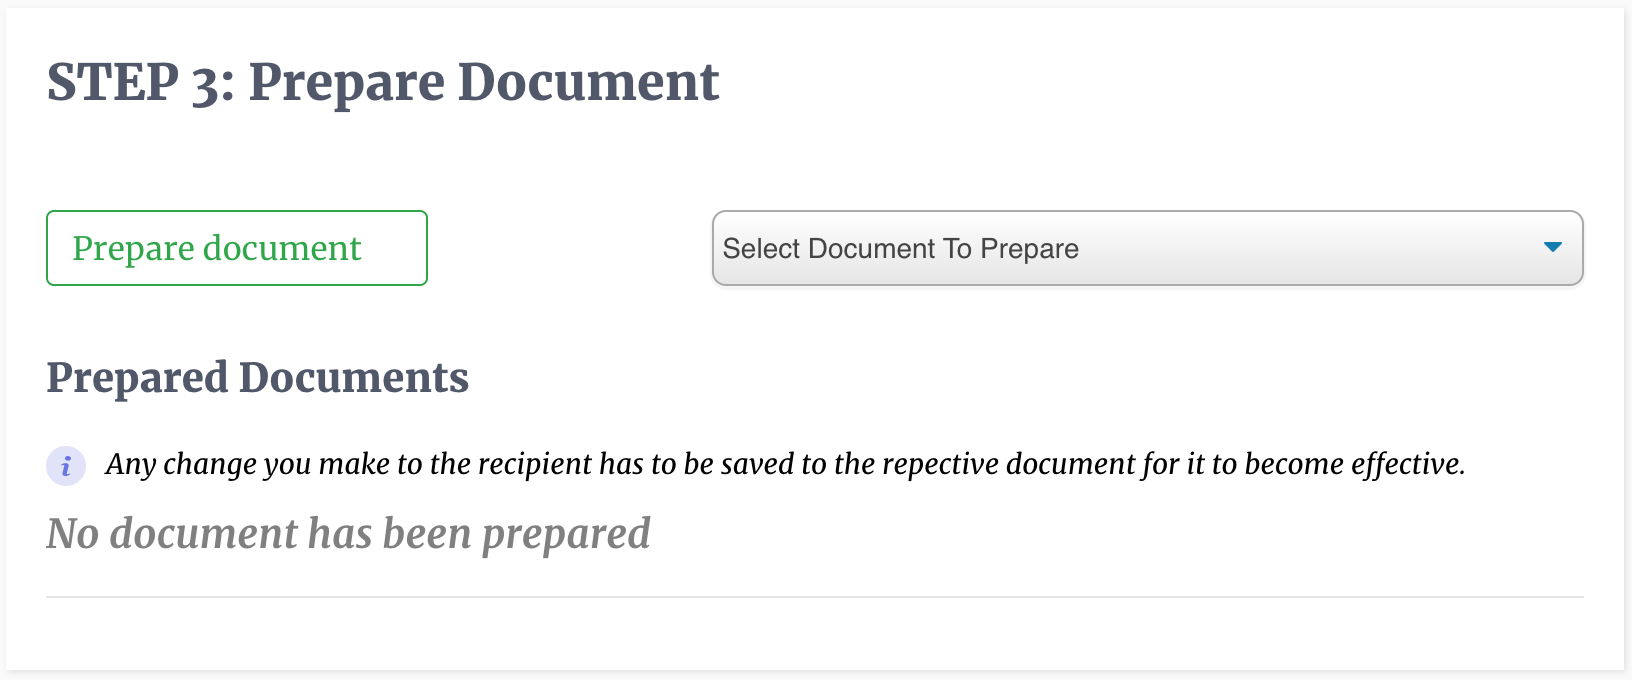 Prepare Documents